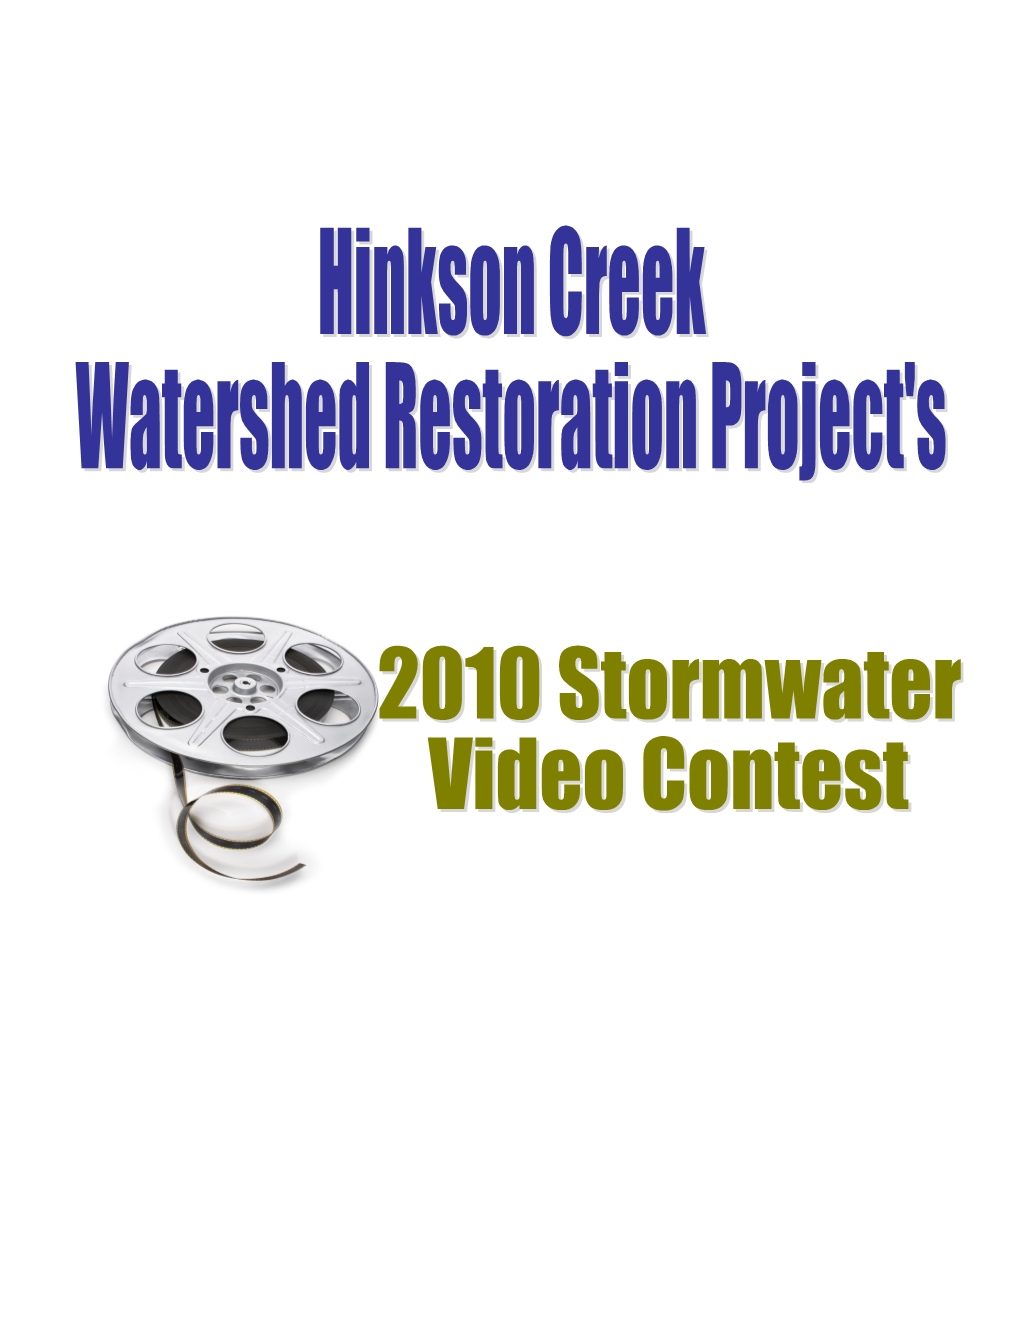 Hinkson Creek Watershed Restoration Project